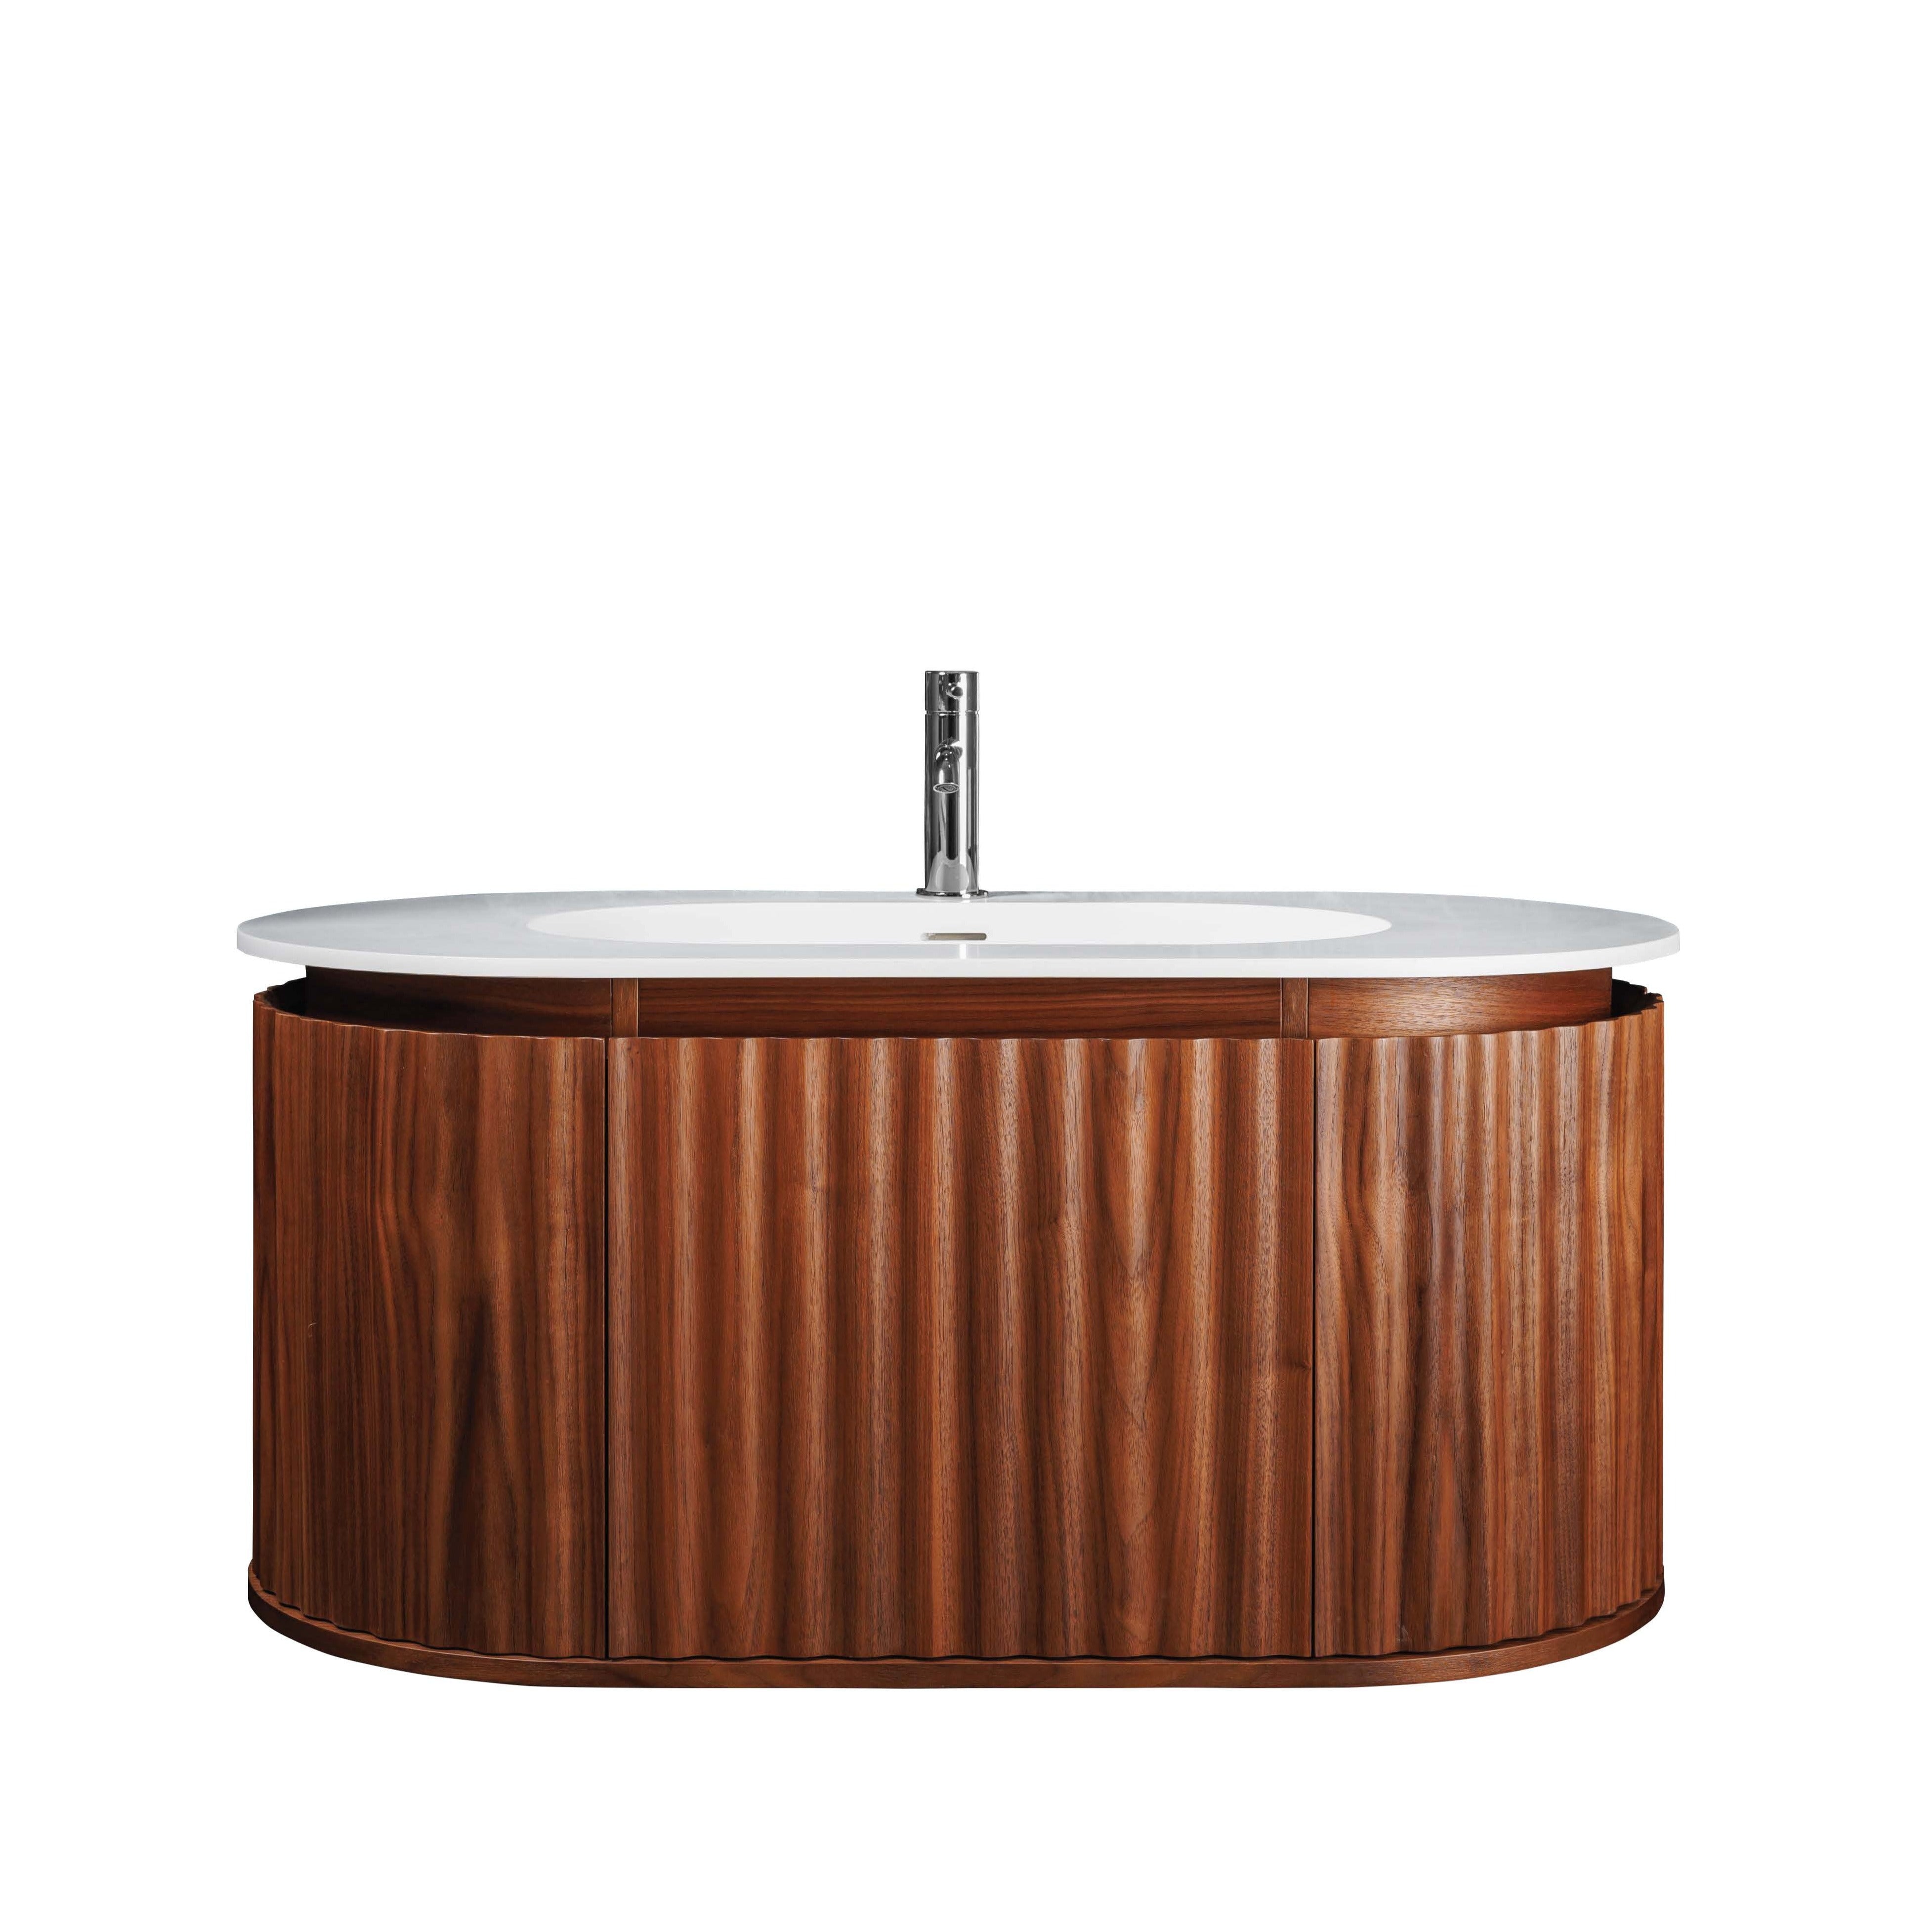 39" Walnut Single Sink Bathroom Vanity with I-Stone Countertop Product Code: MC 1000FB-W